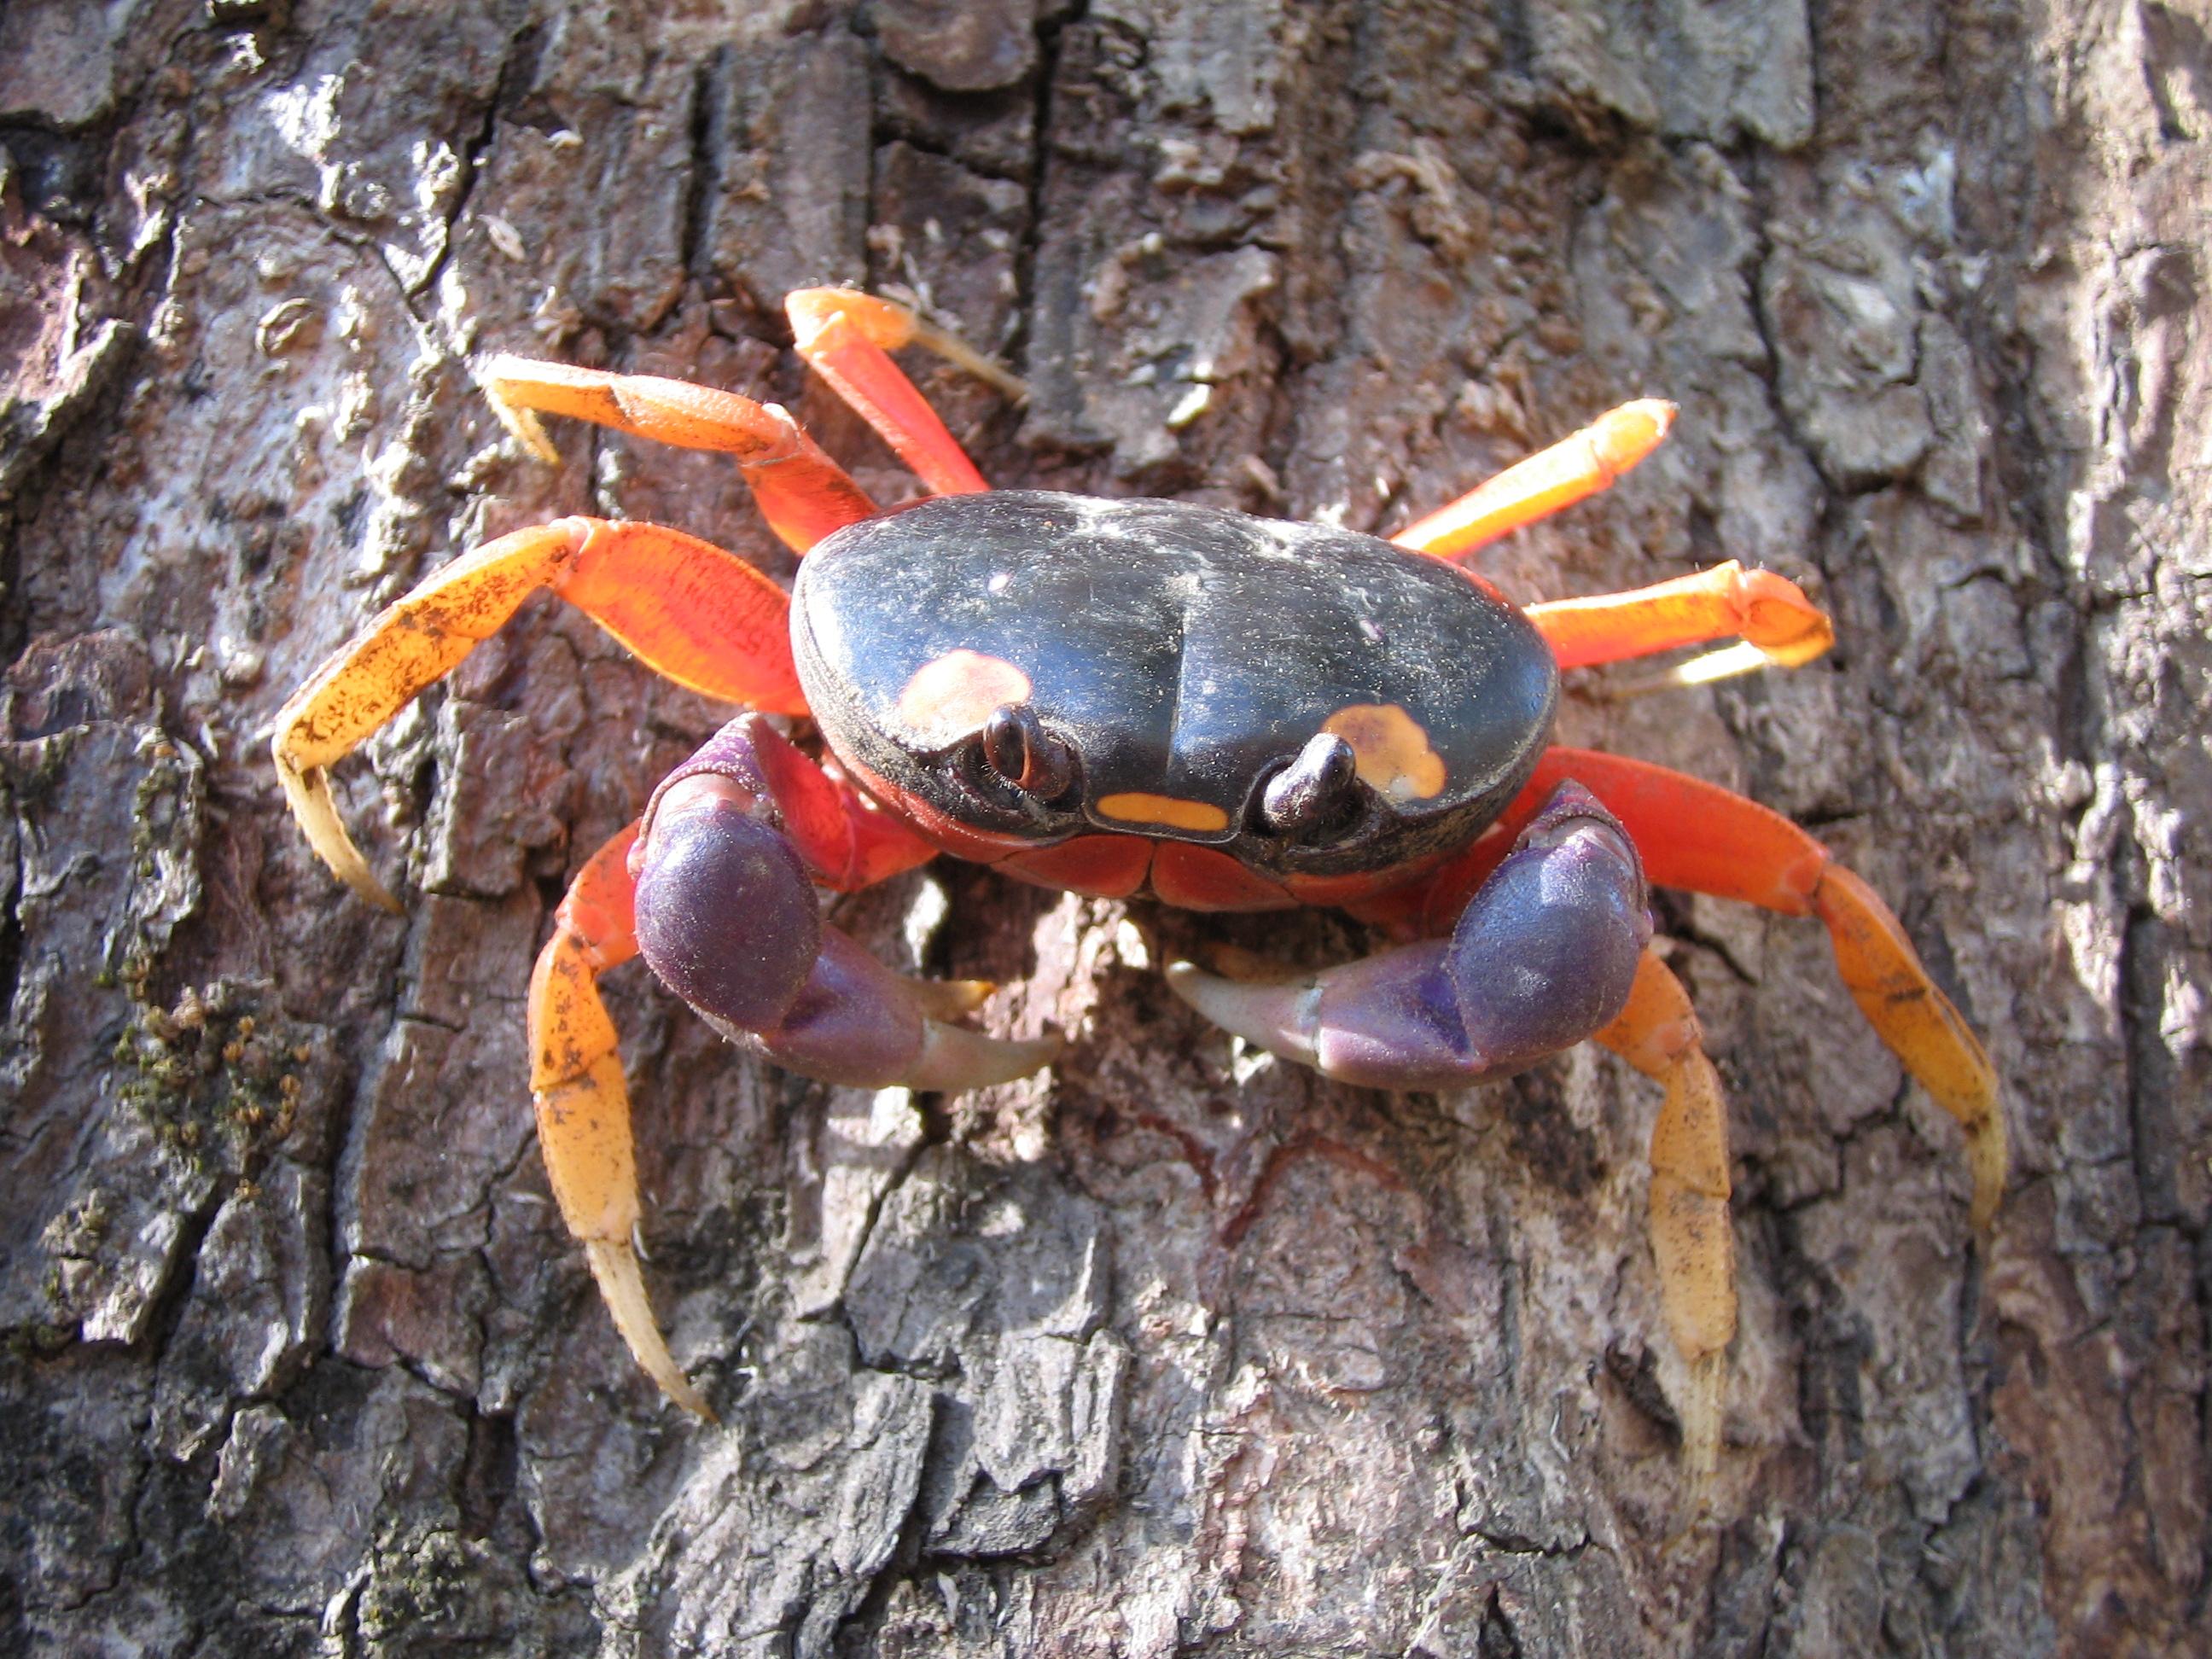 Crab on the tree